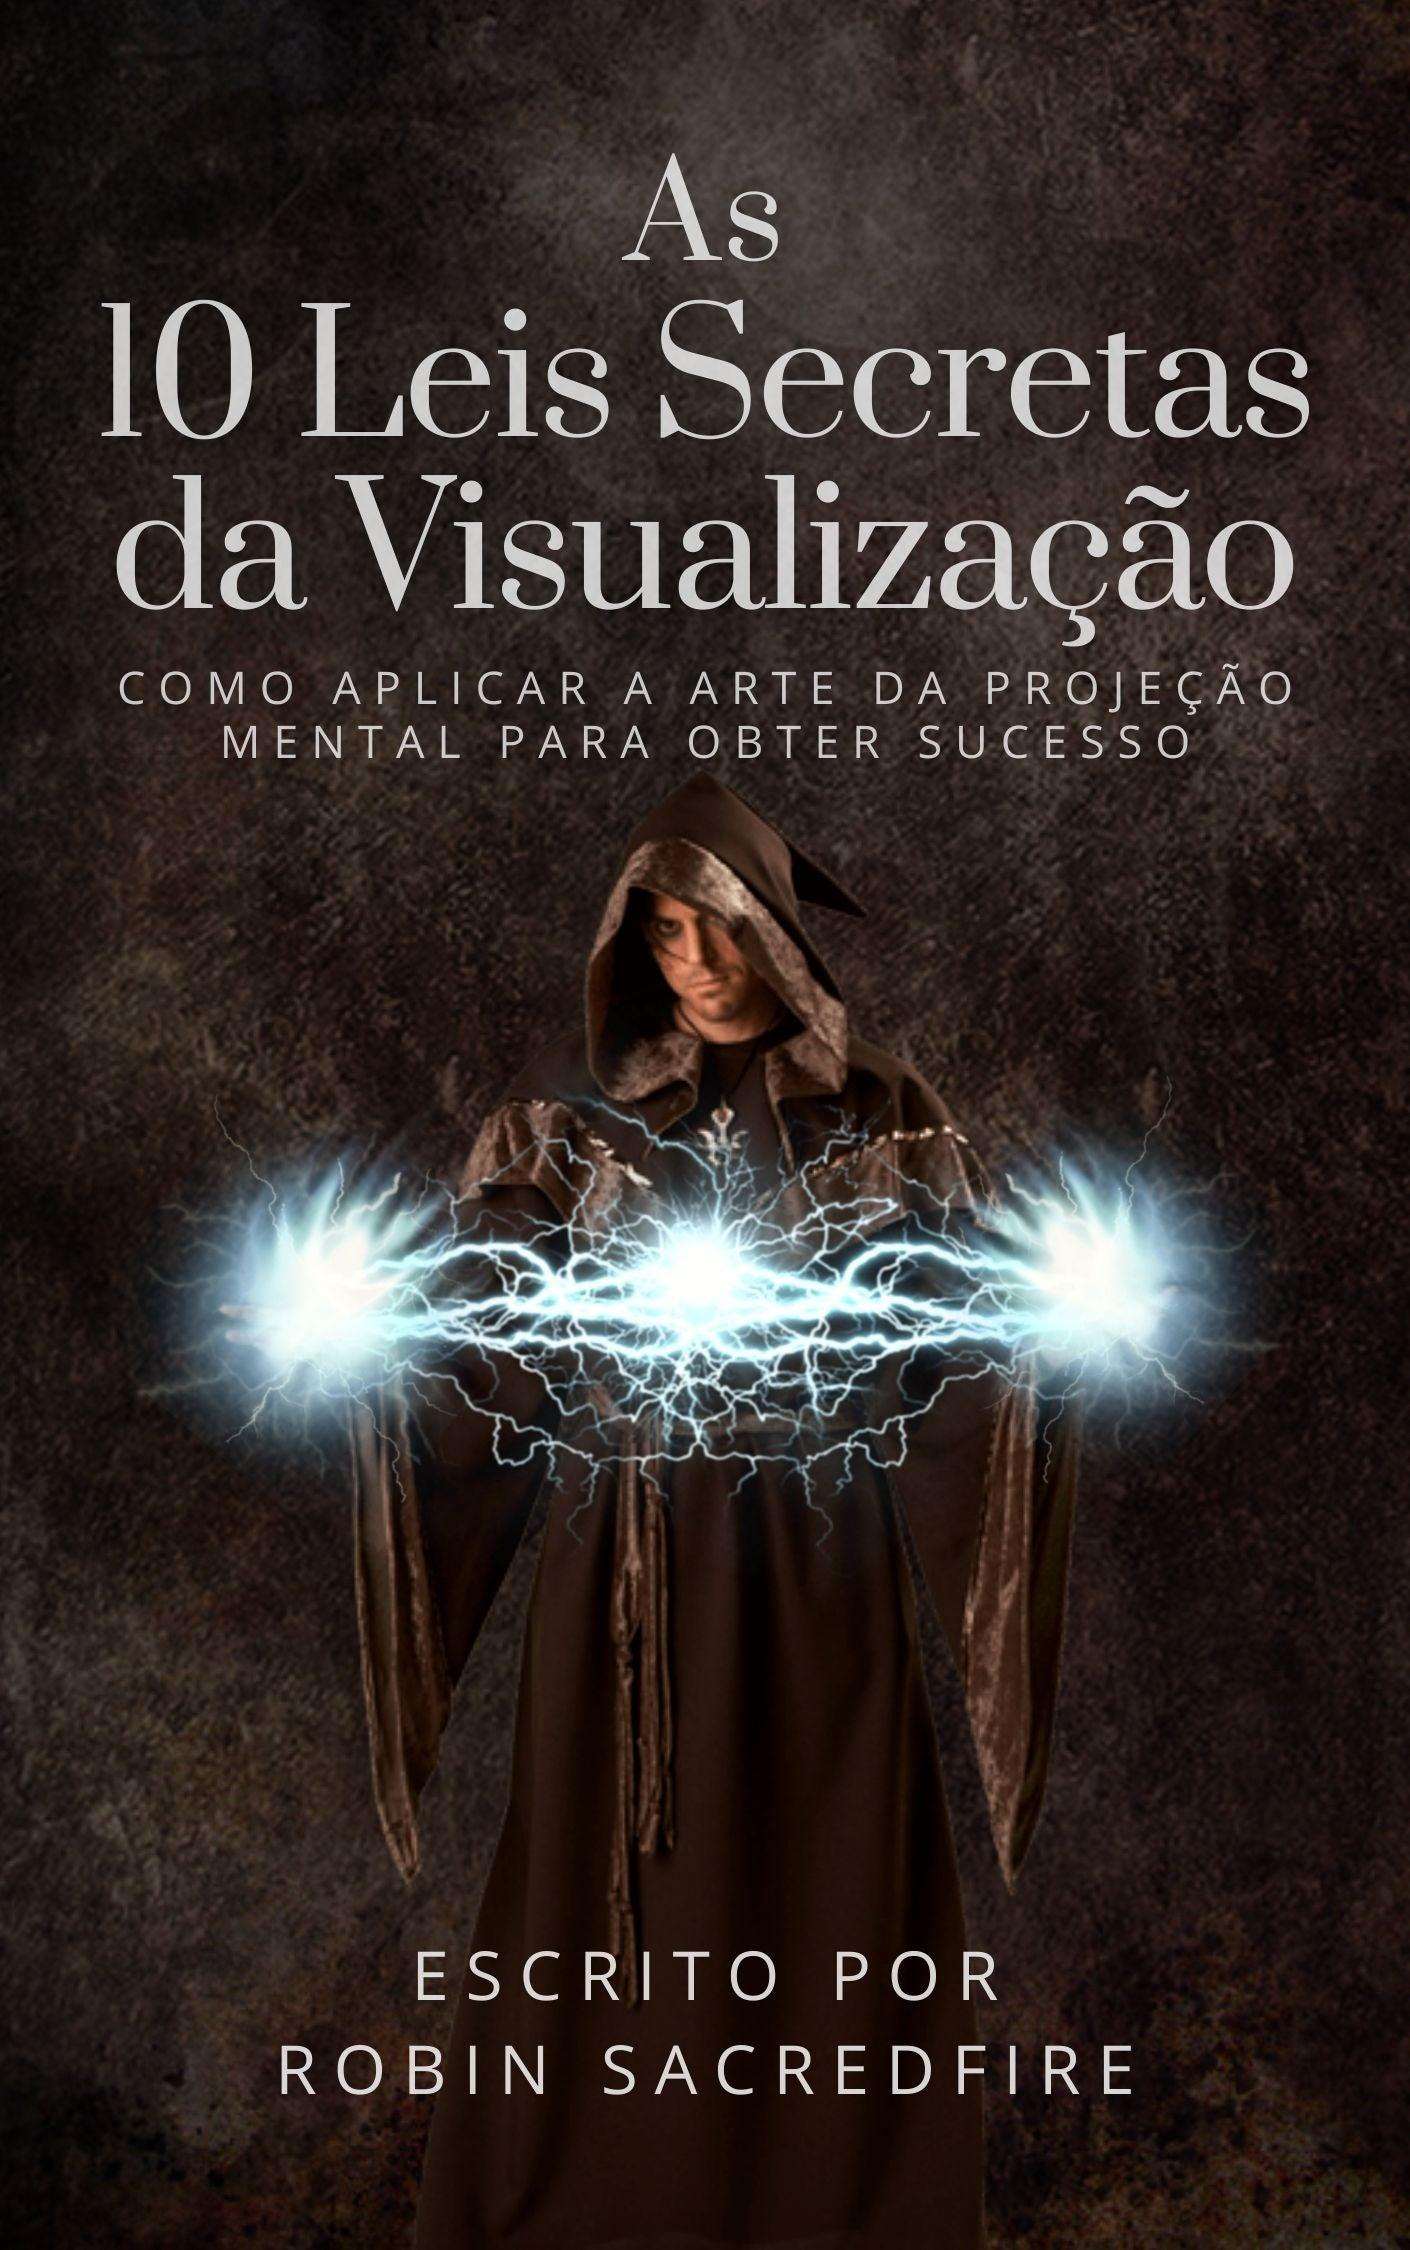 The 10 Secret Laws of Visualization Portuguese